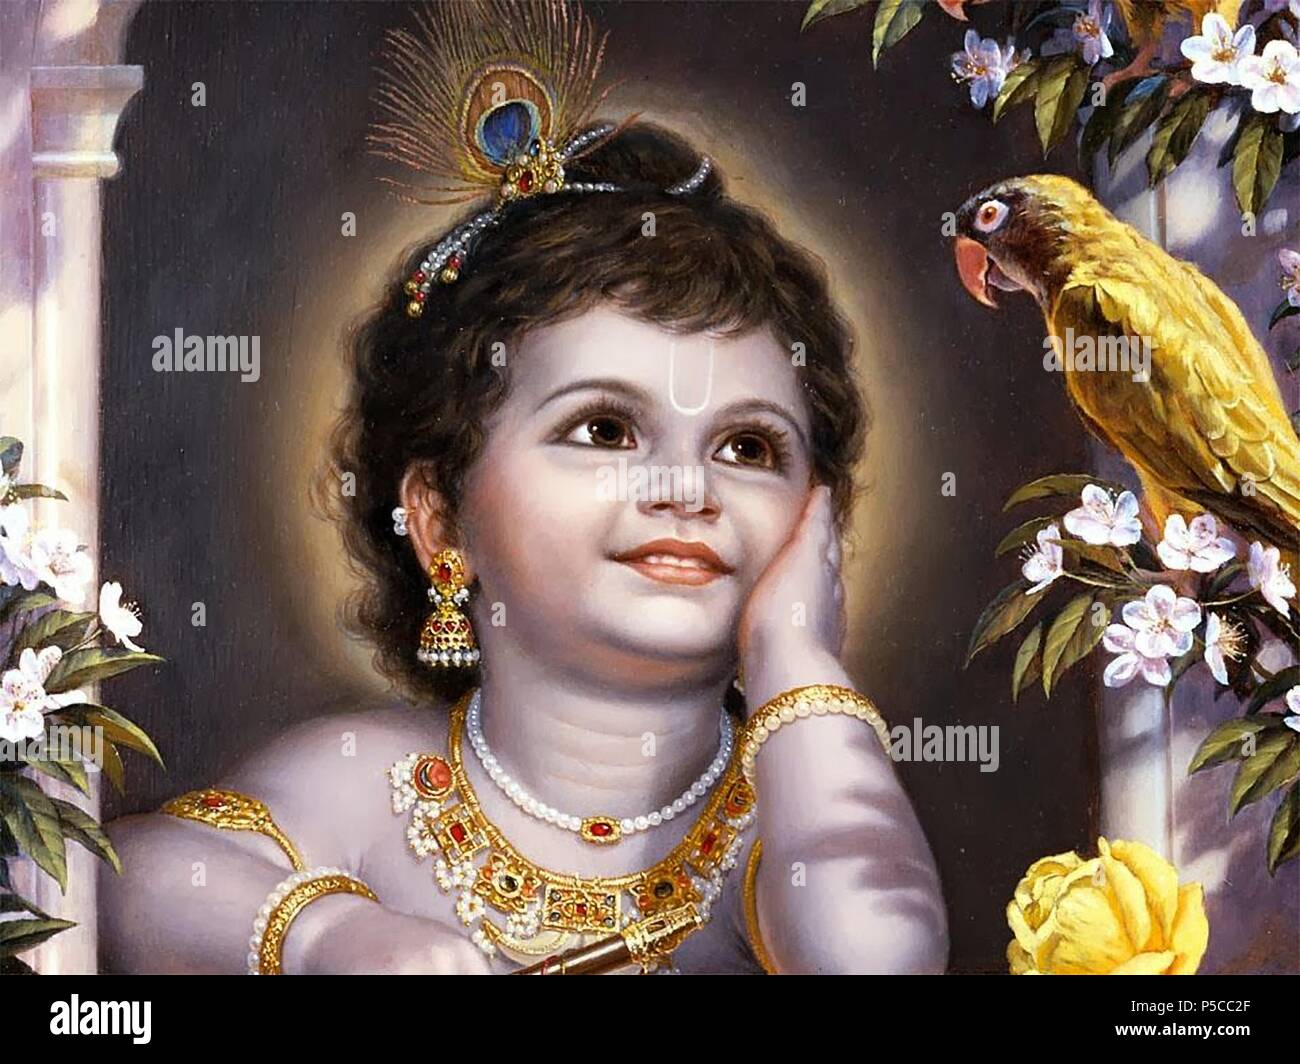 Indian God Krishna as a child playful colourful illustration Stock ...